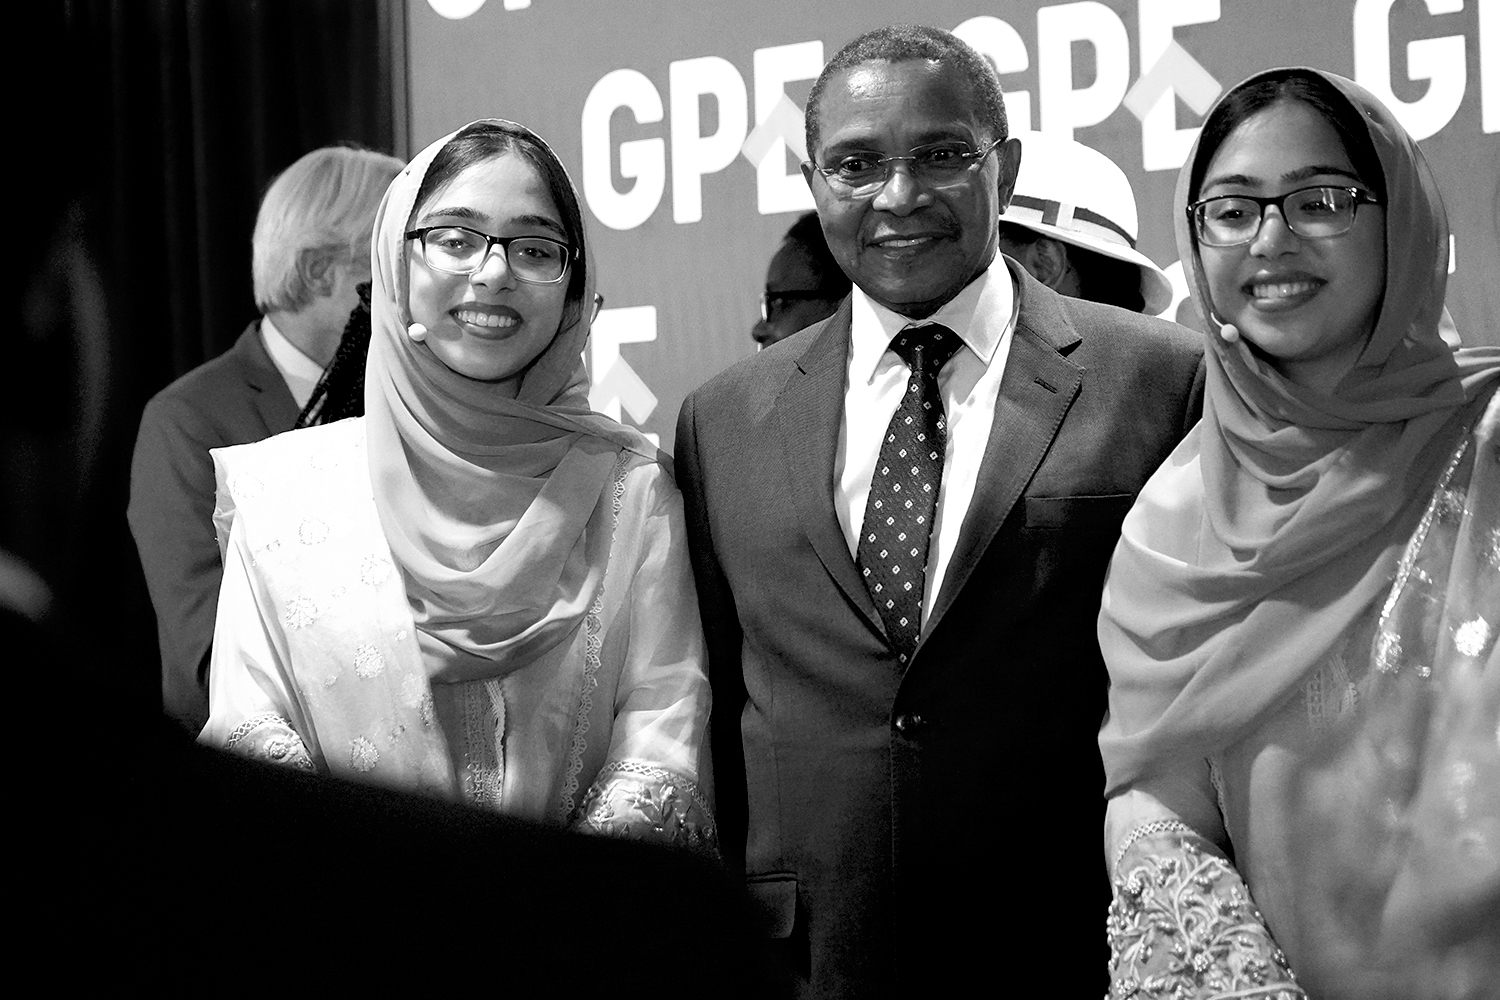 President Kikwete with GPE youth leaders Maryam and Nivaal Rehman.